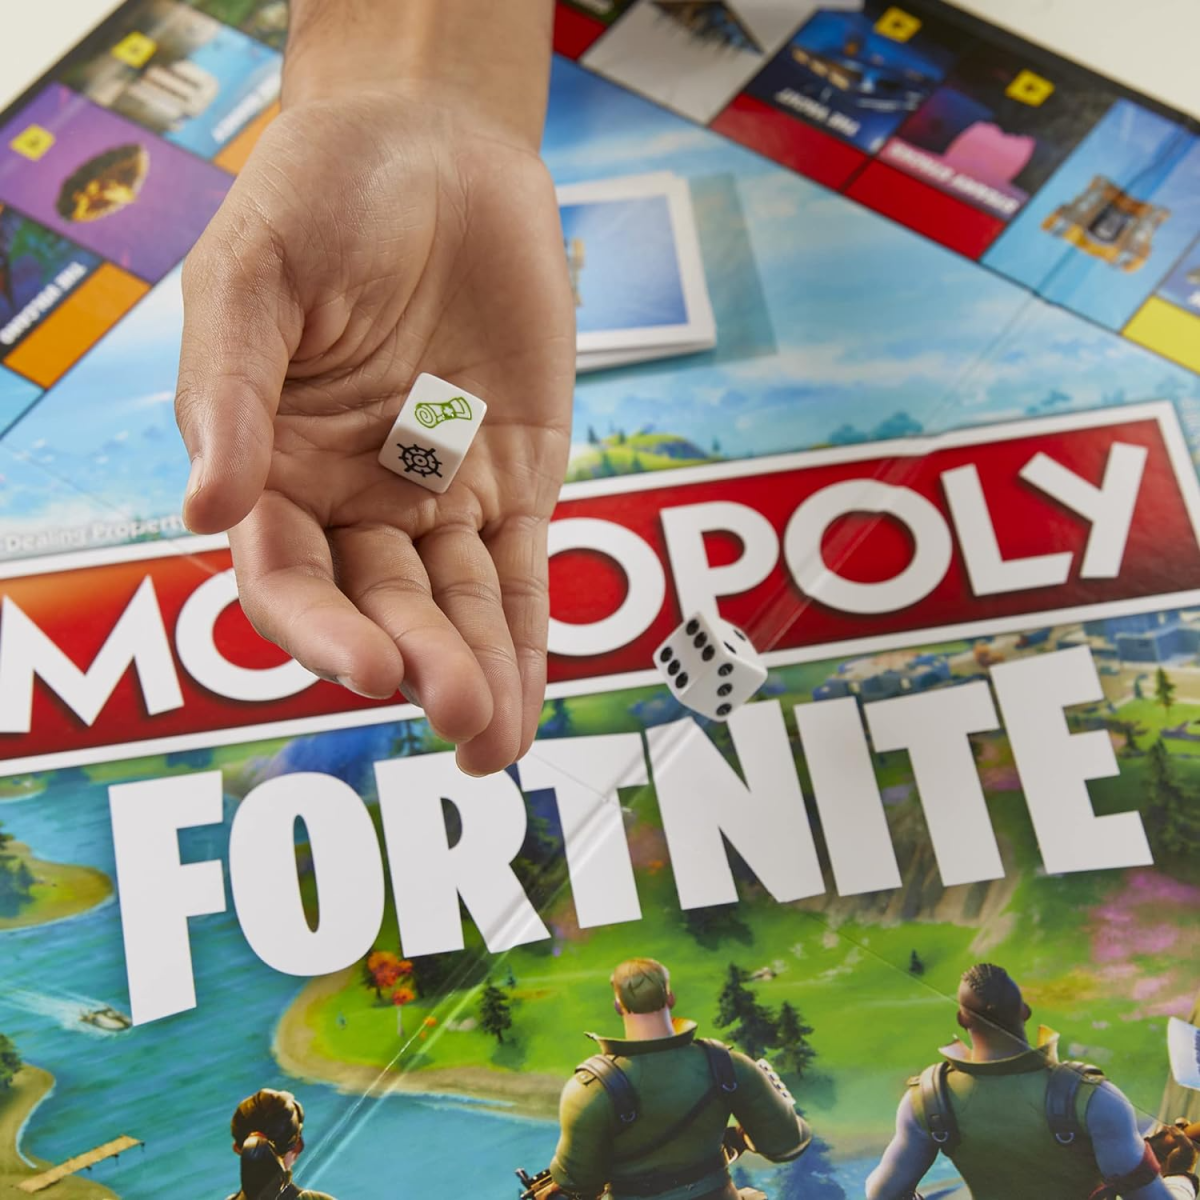 Monopoly: ฉบับสะสมของ Fortnite